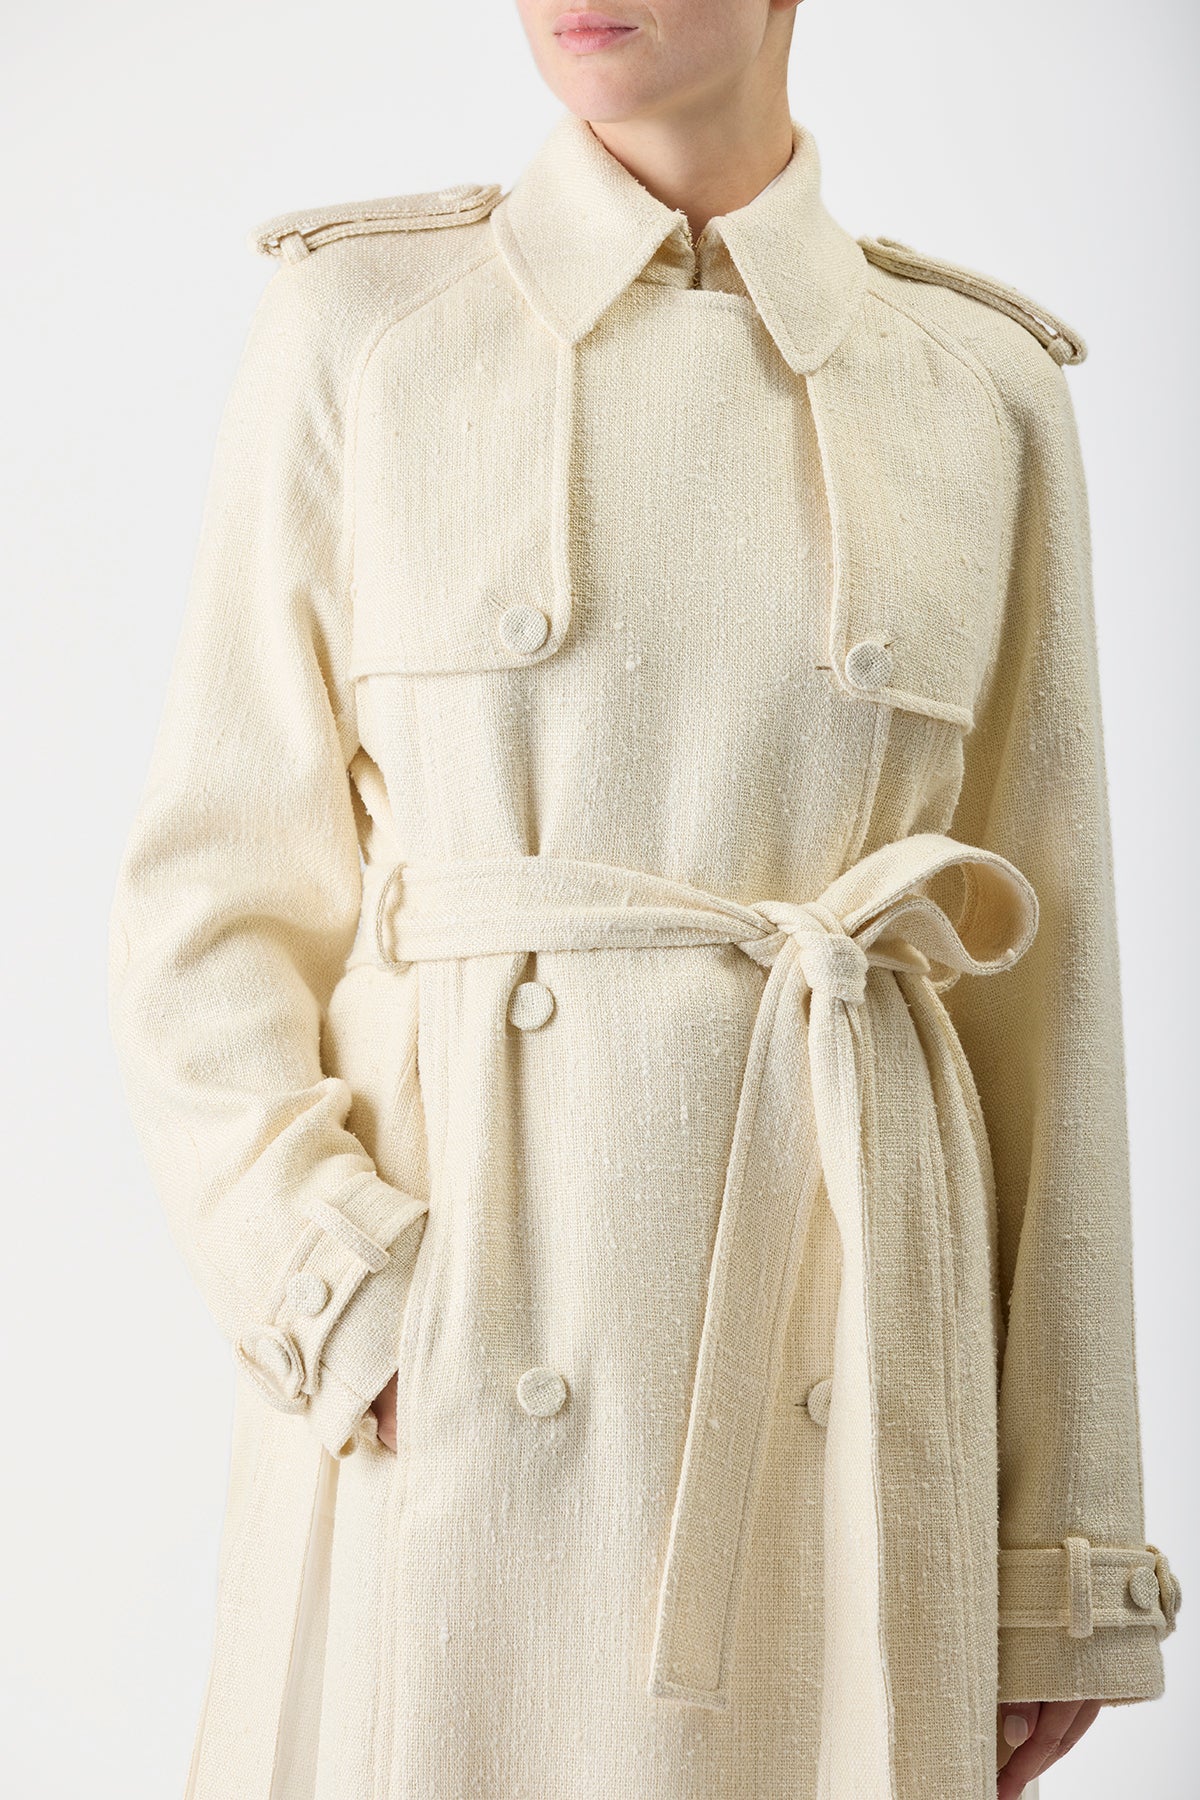 Eithne Trench Coat in Ivory Silk Wool Slub